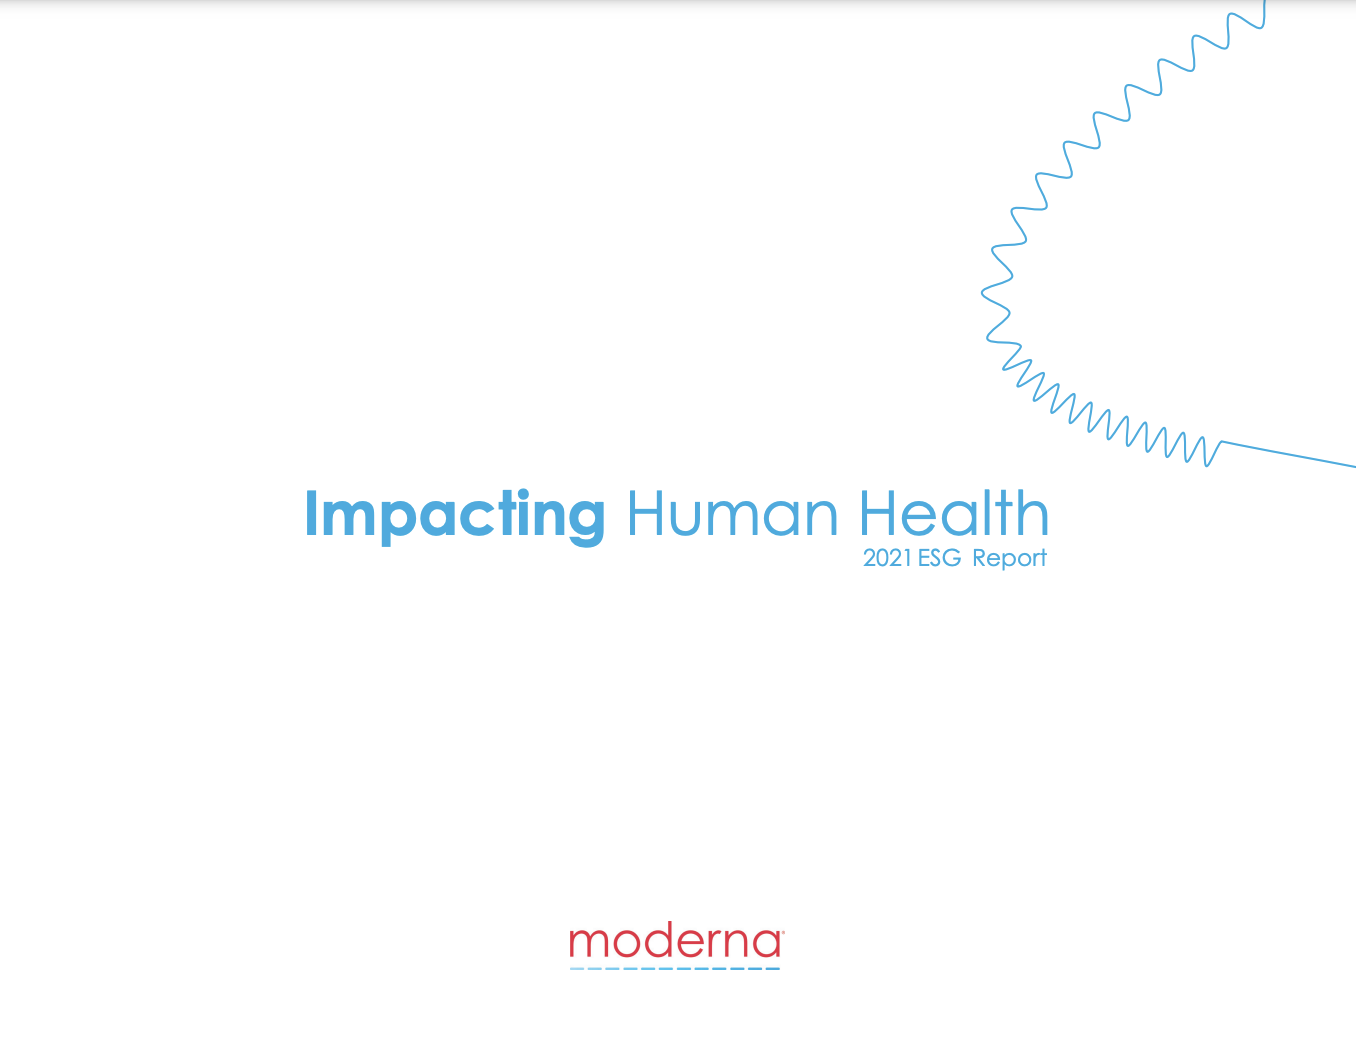 "Impacting Human Health 2021 ESG Report" with Moderna logo